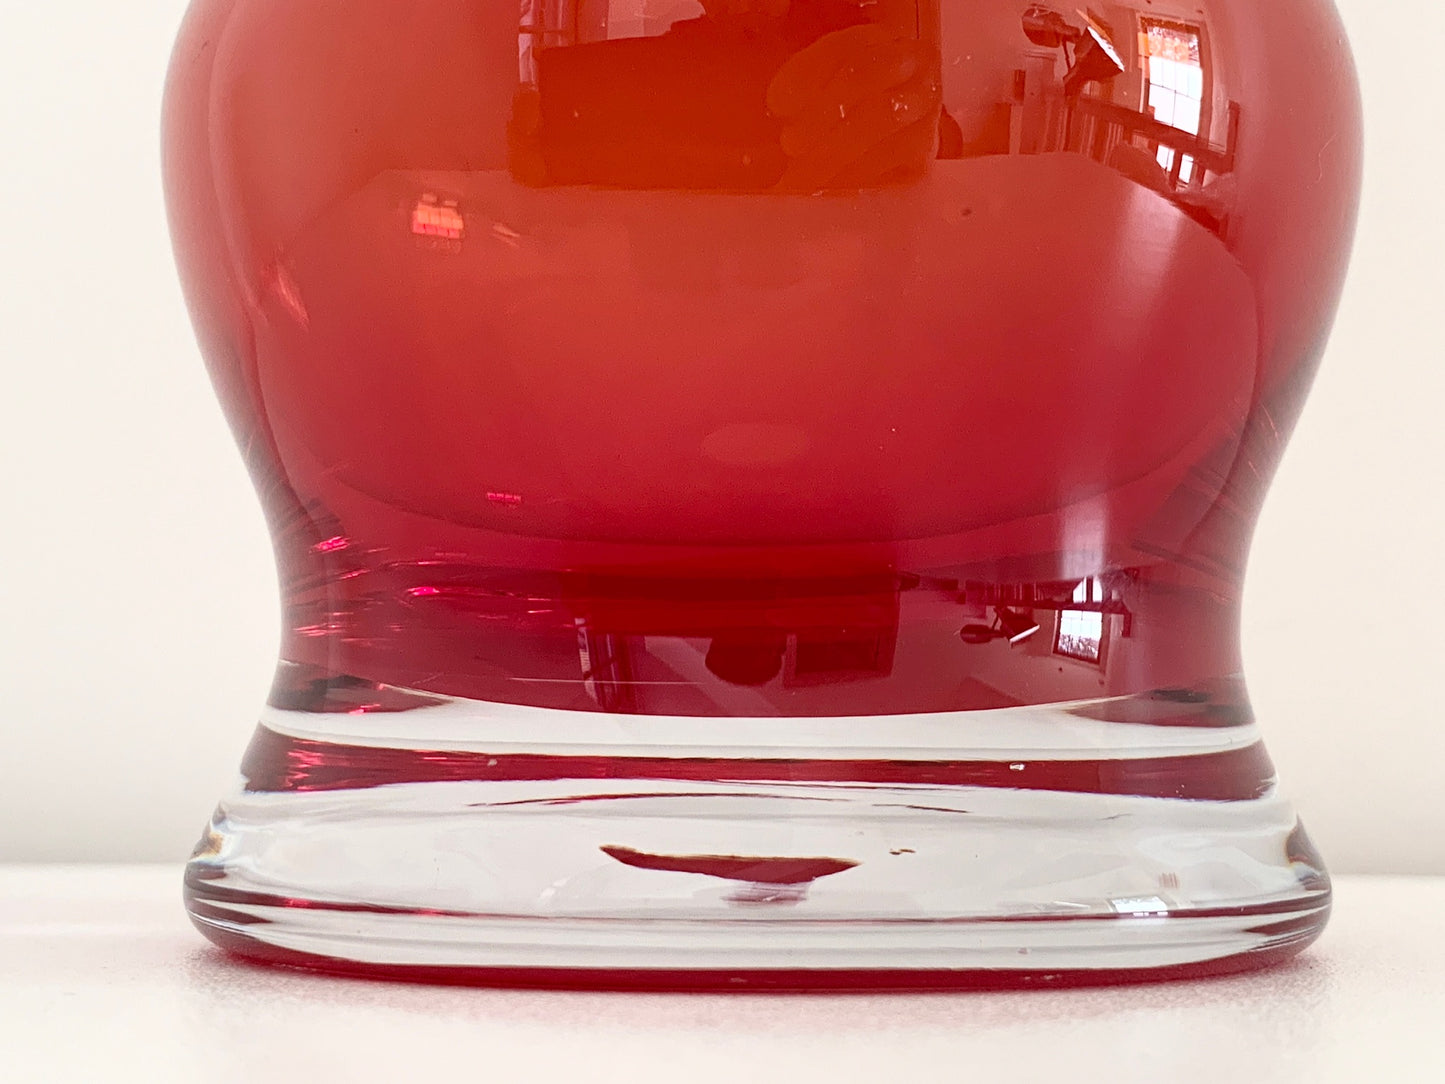 Retro Riihimaki Red Glass Vase Tamara Aladin Vintage 1970s Scandinavian Space Age